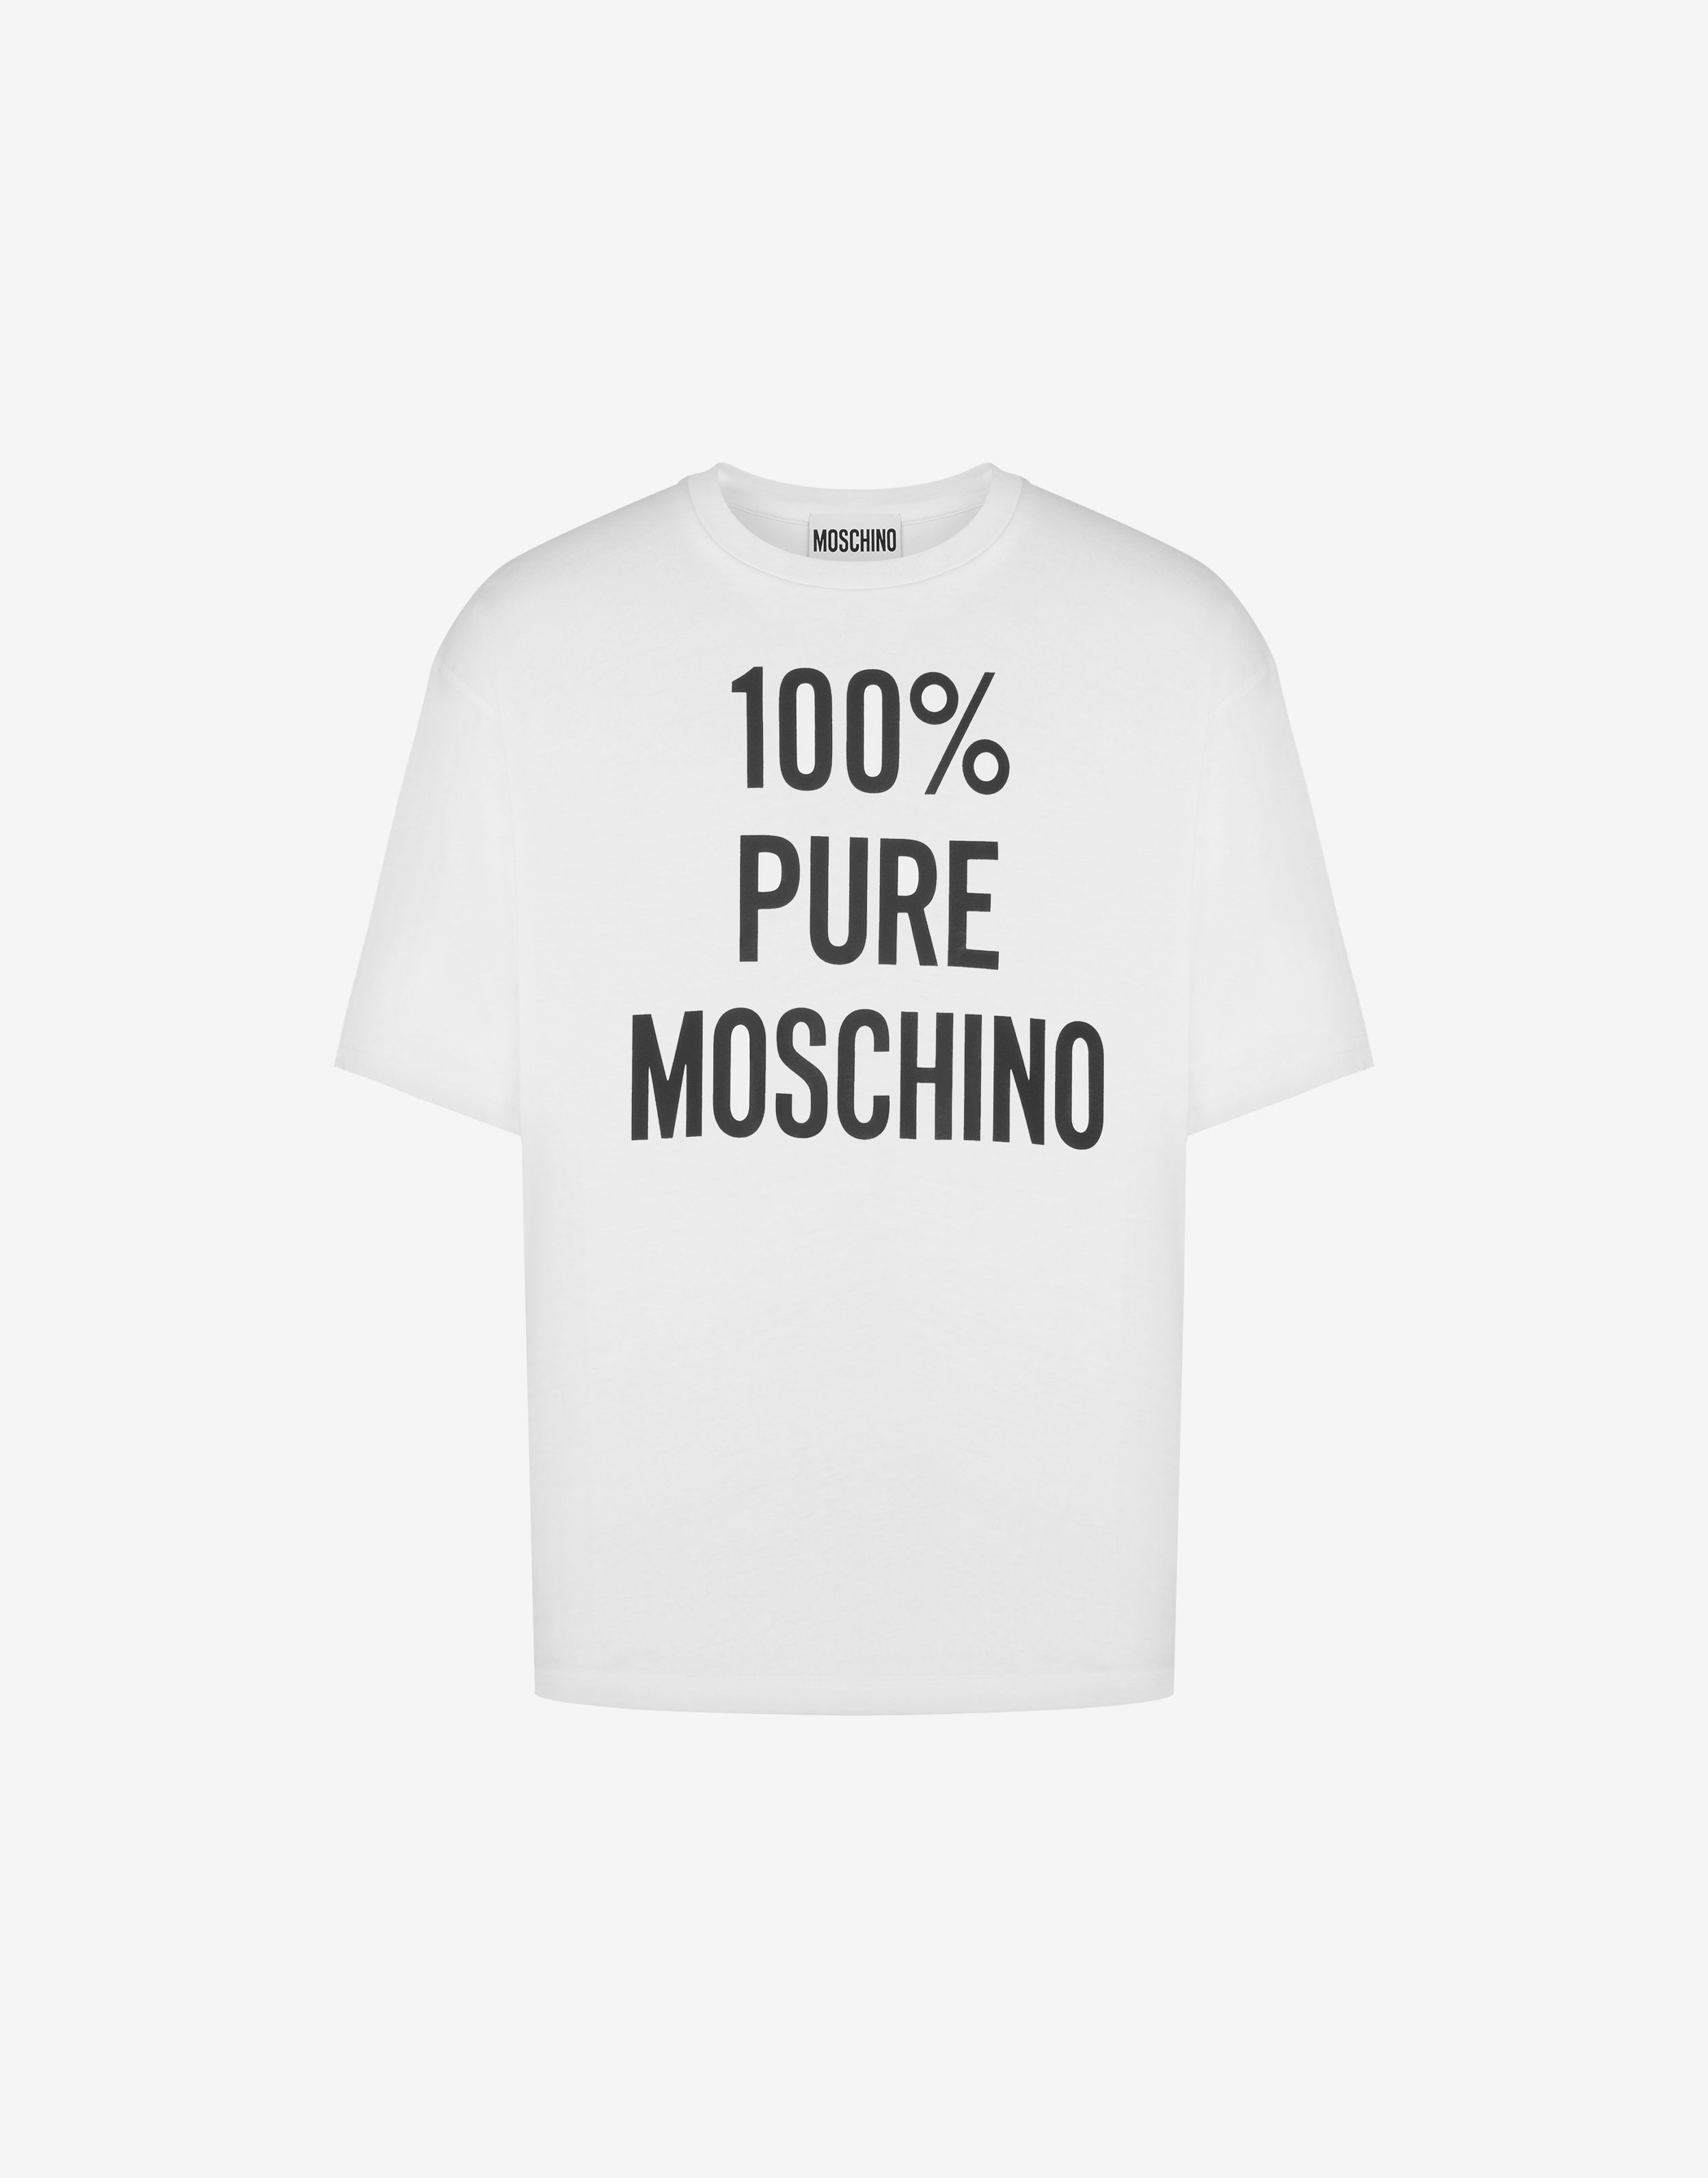 Moschino Camisetas for Hombre - Official Store